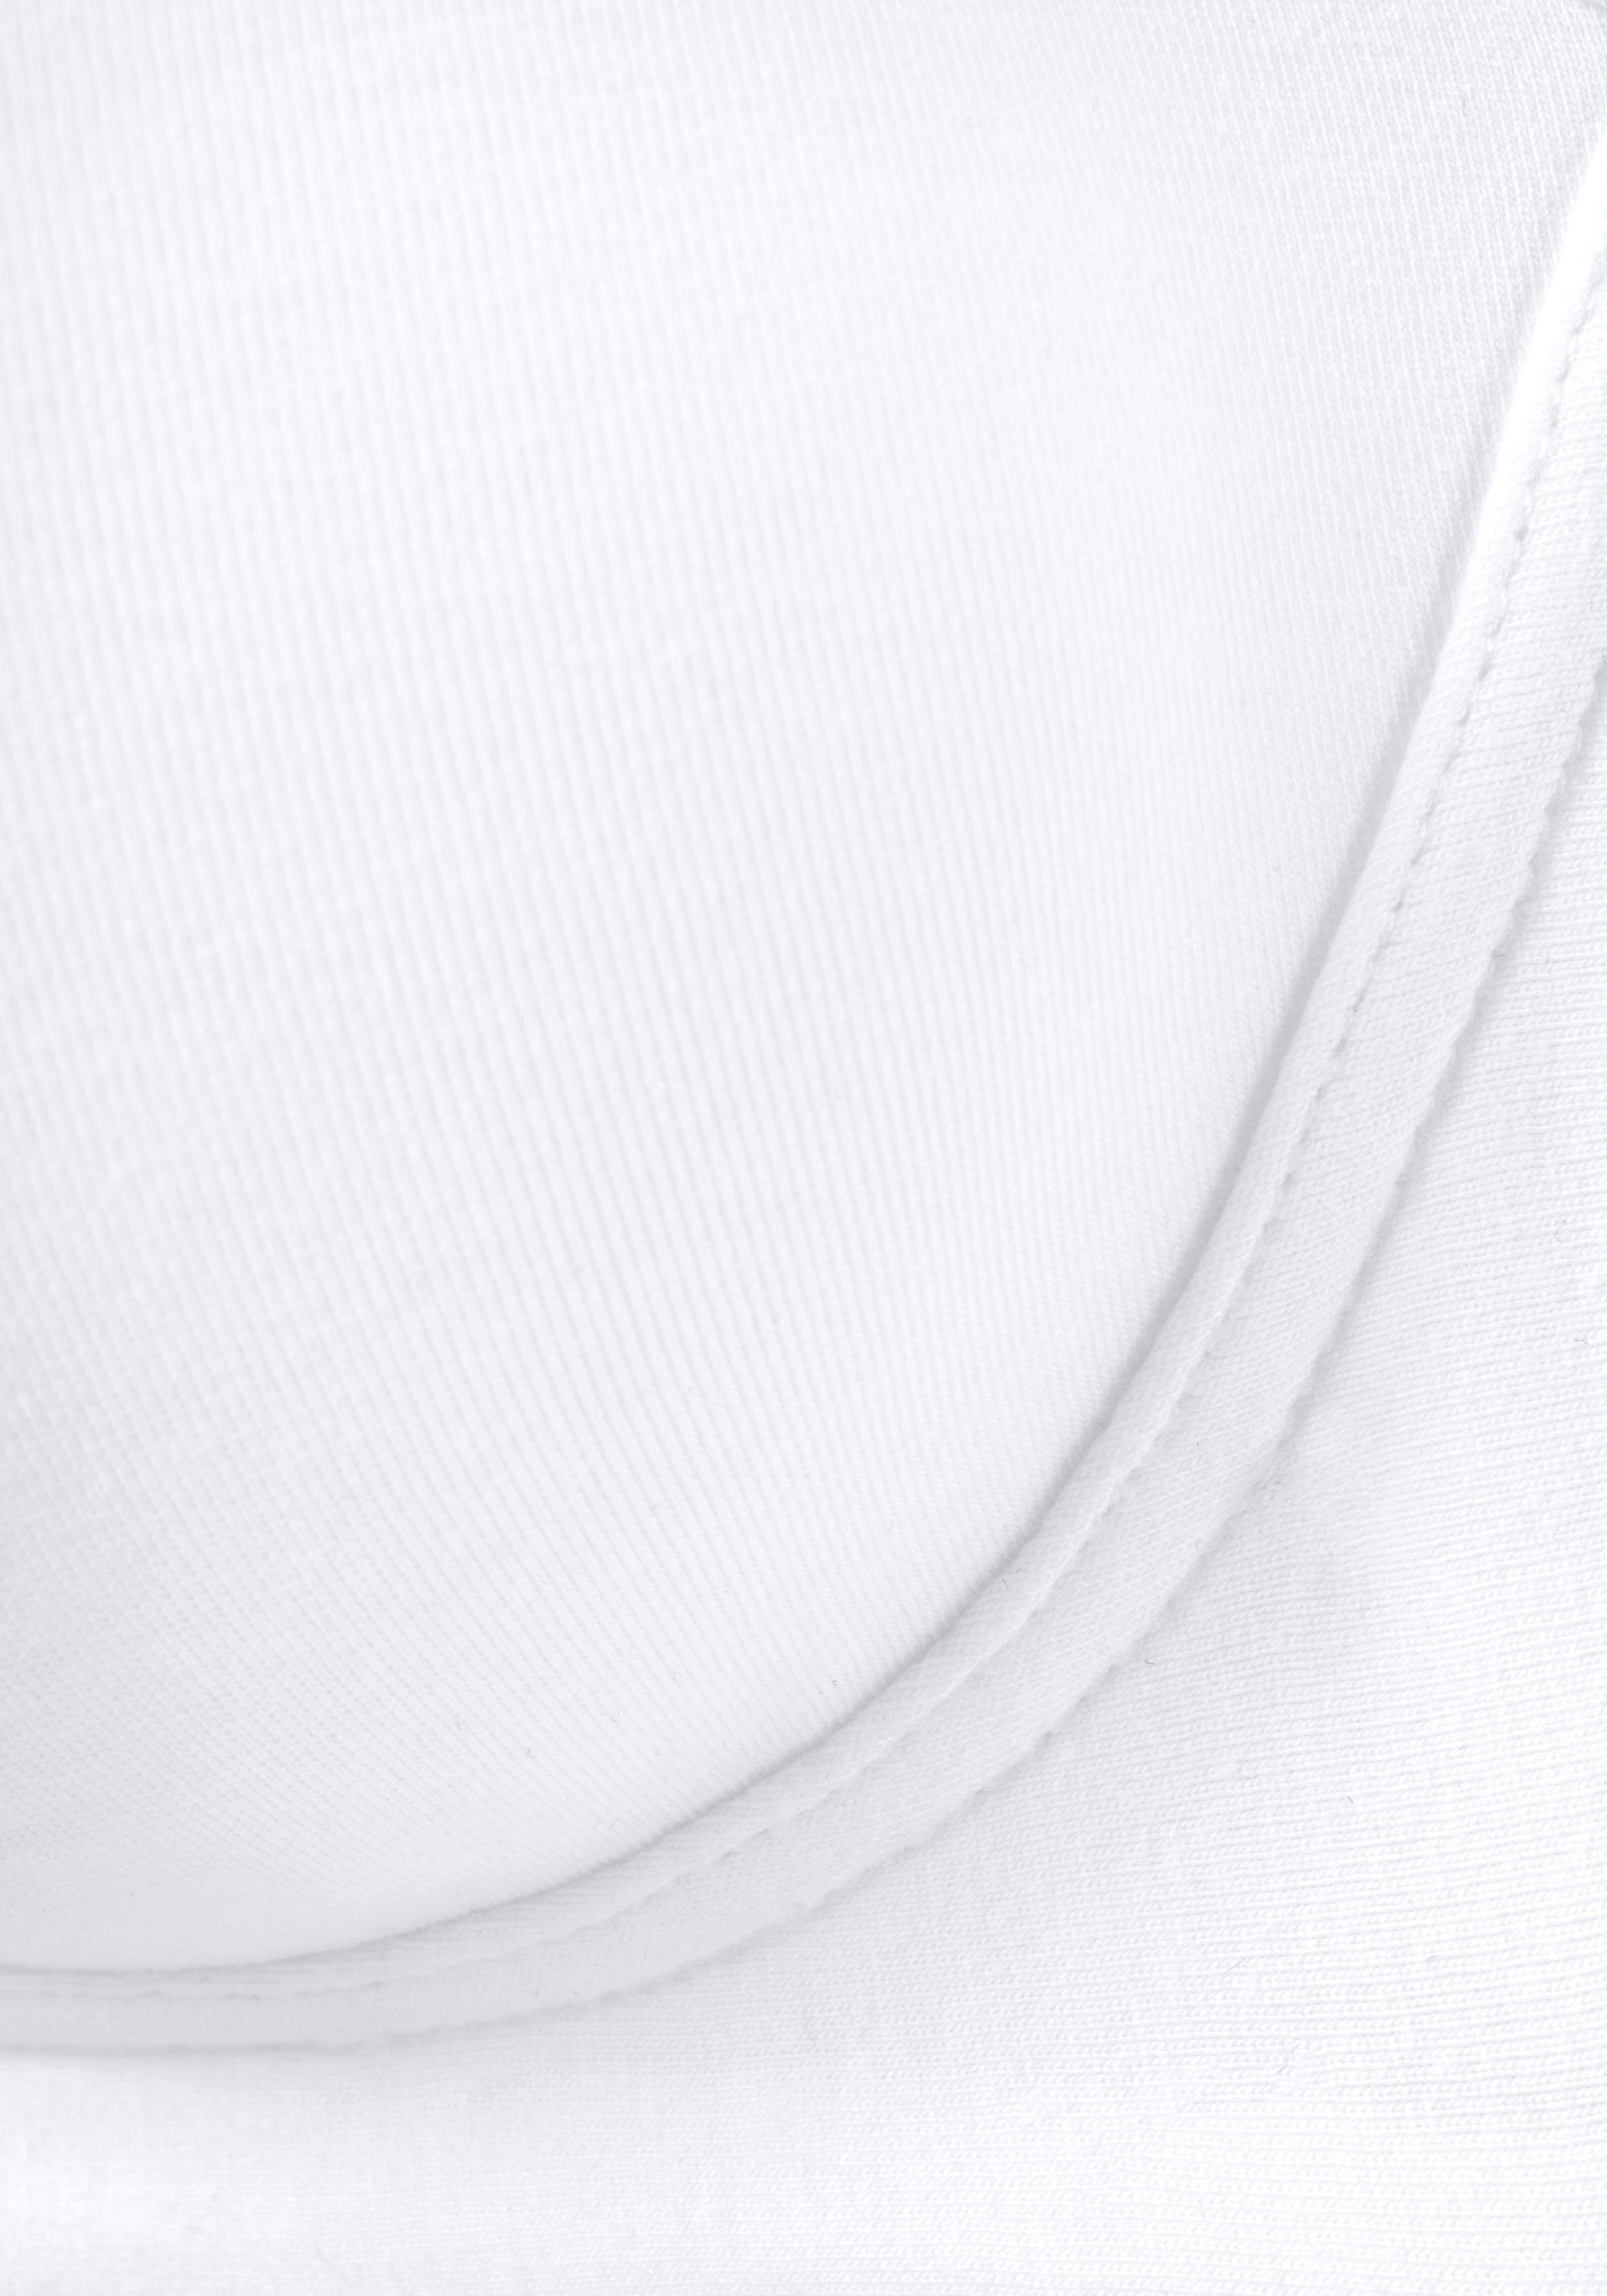 aus 2 Bügel ohne petite Stück) T-Shirt-BH (Packung, Dessous Baumwolle, Basic mint+weiß fleur